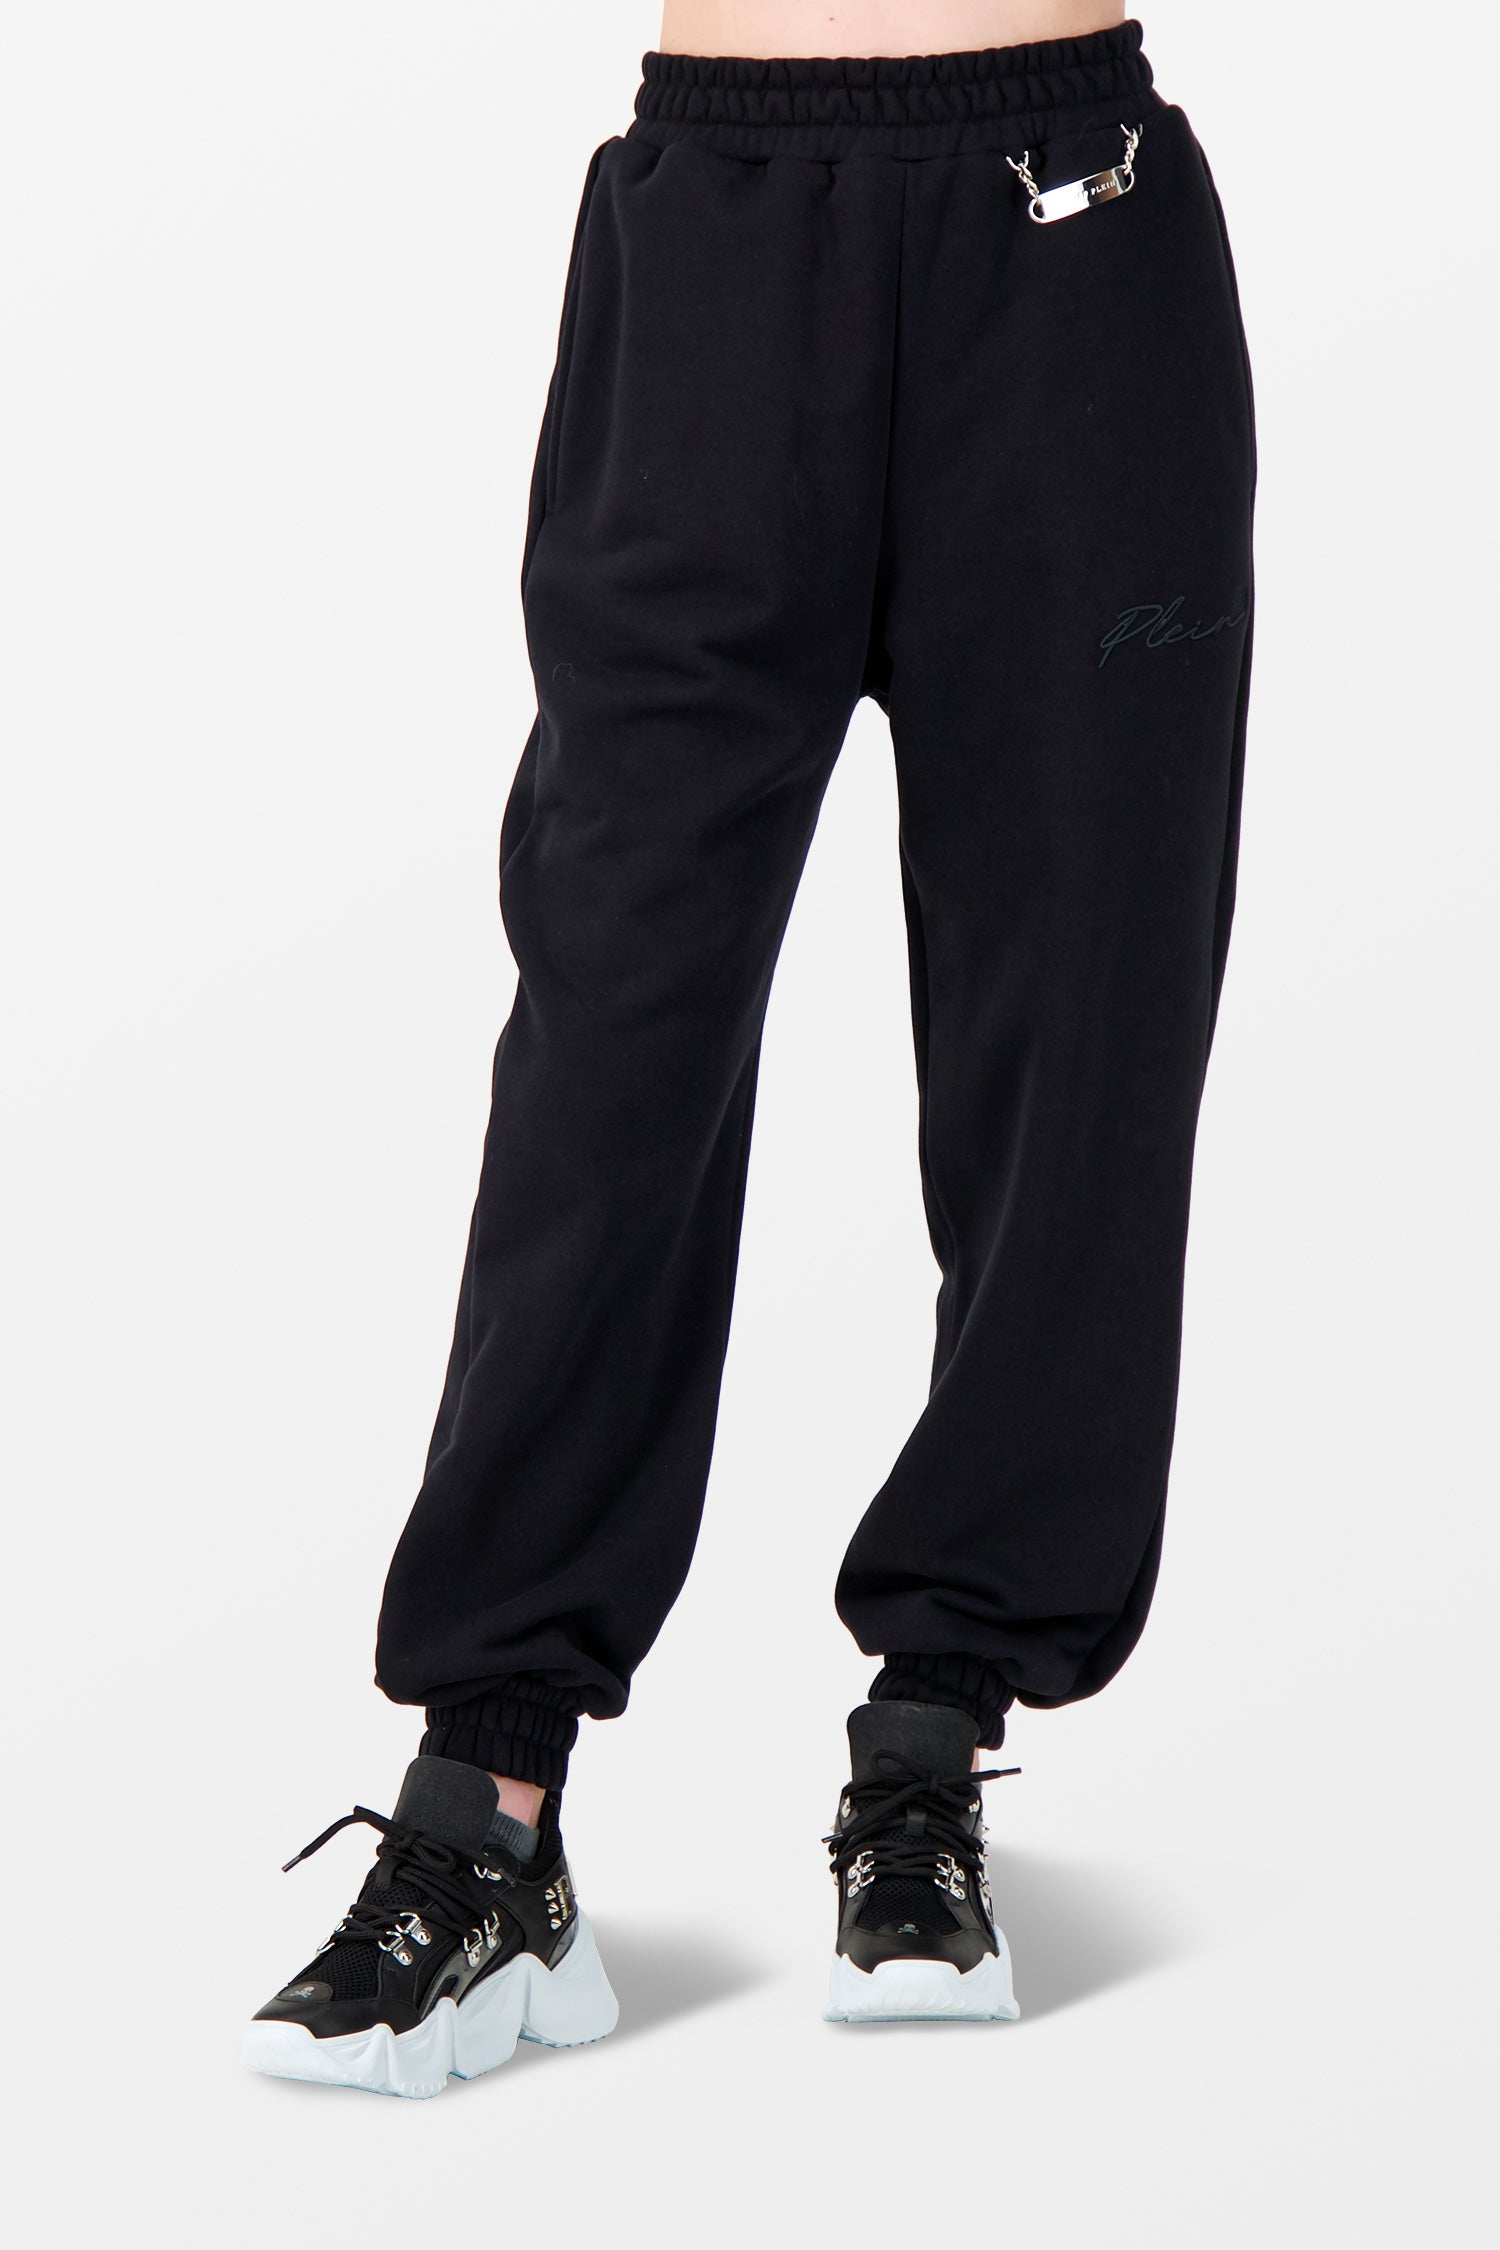 Philipp Plein Black Embroidery Signature Trousers